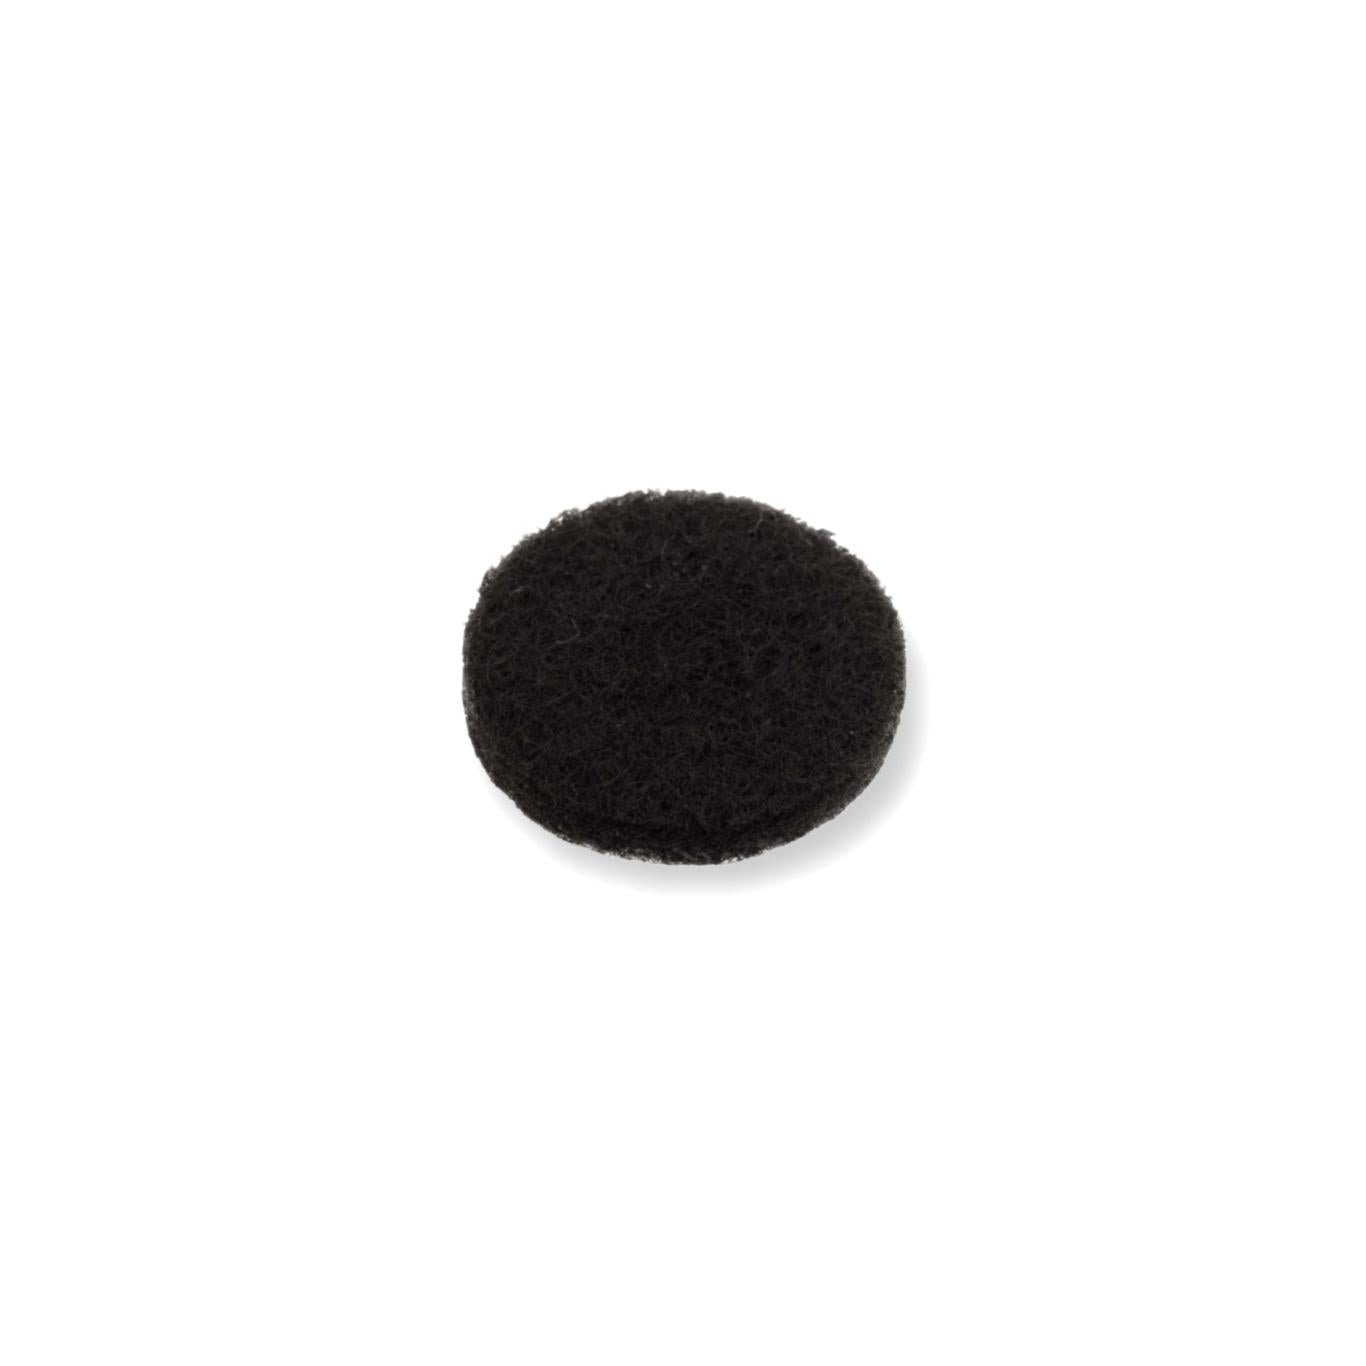 Felt Pads - Dark Brown Self Adhesive Stick on Felt - Round 22mm Diameter - Made in Germany